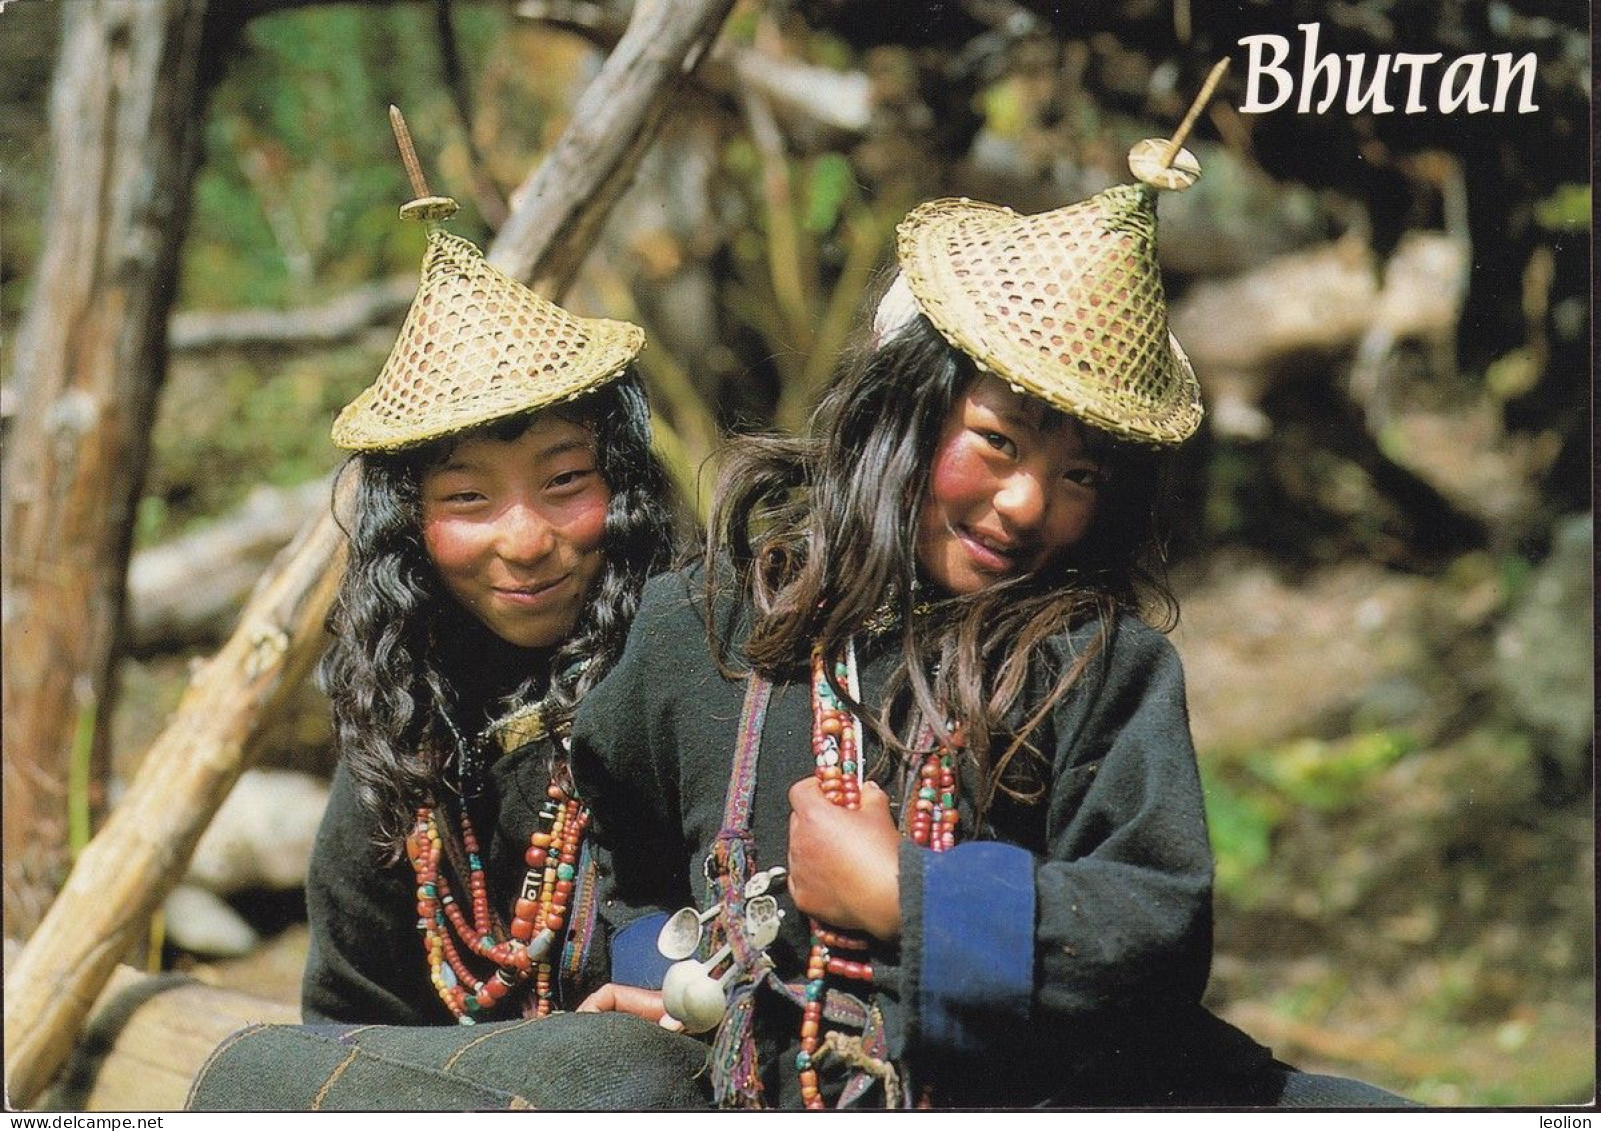 BHUTAN Village Girls LAYA Etho Metho Tours / Glenn Rowley / Himalayan Images Picture Postcard BHOUTAN - Bután